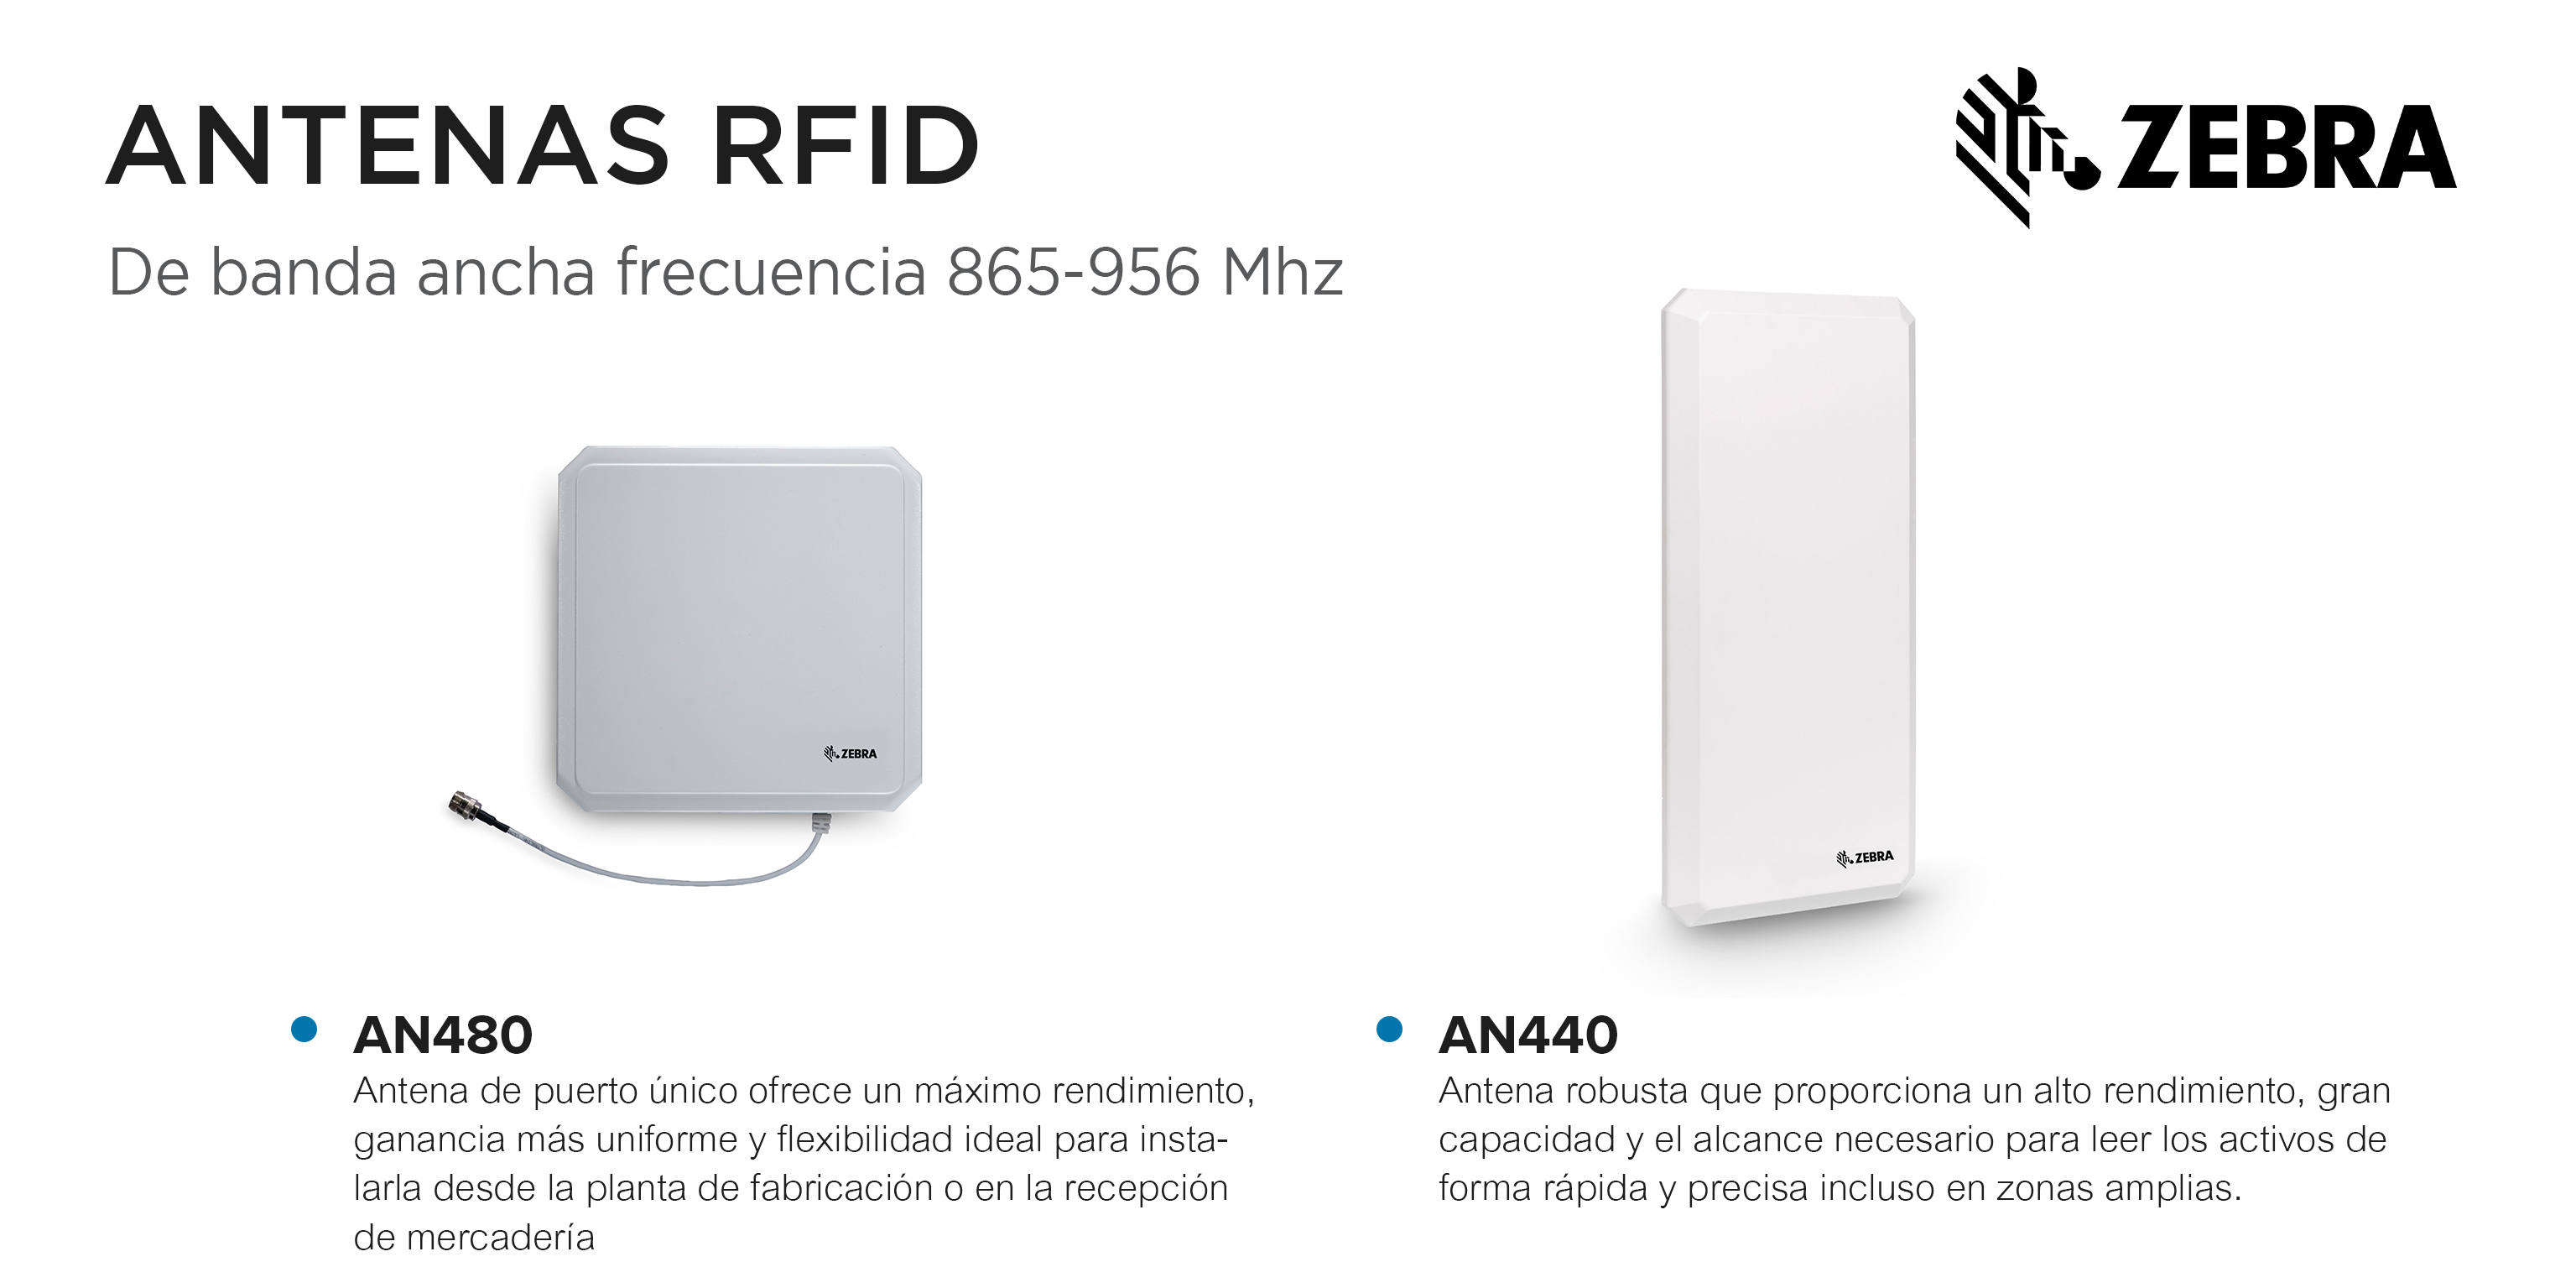 Antenas RFID